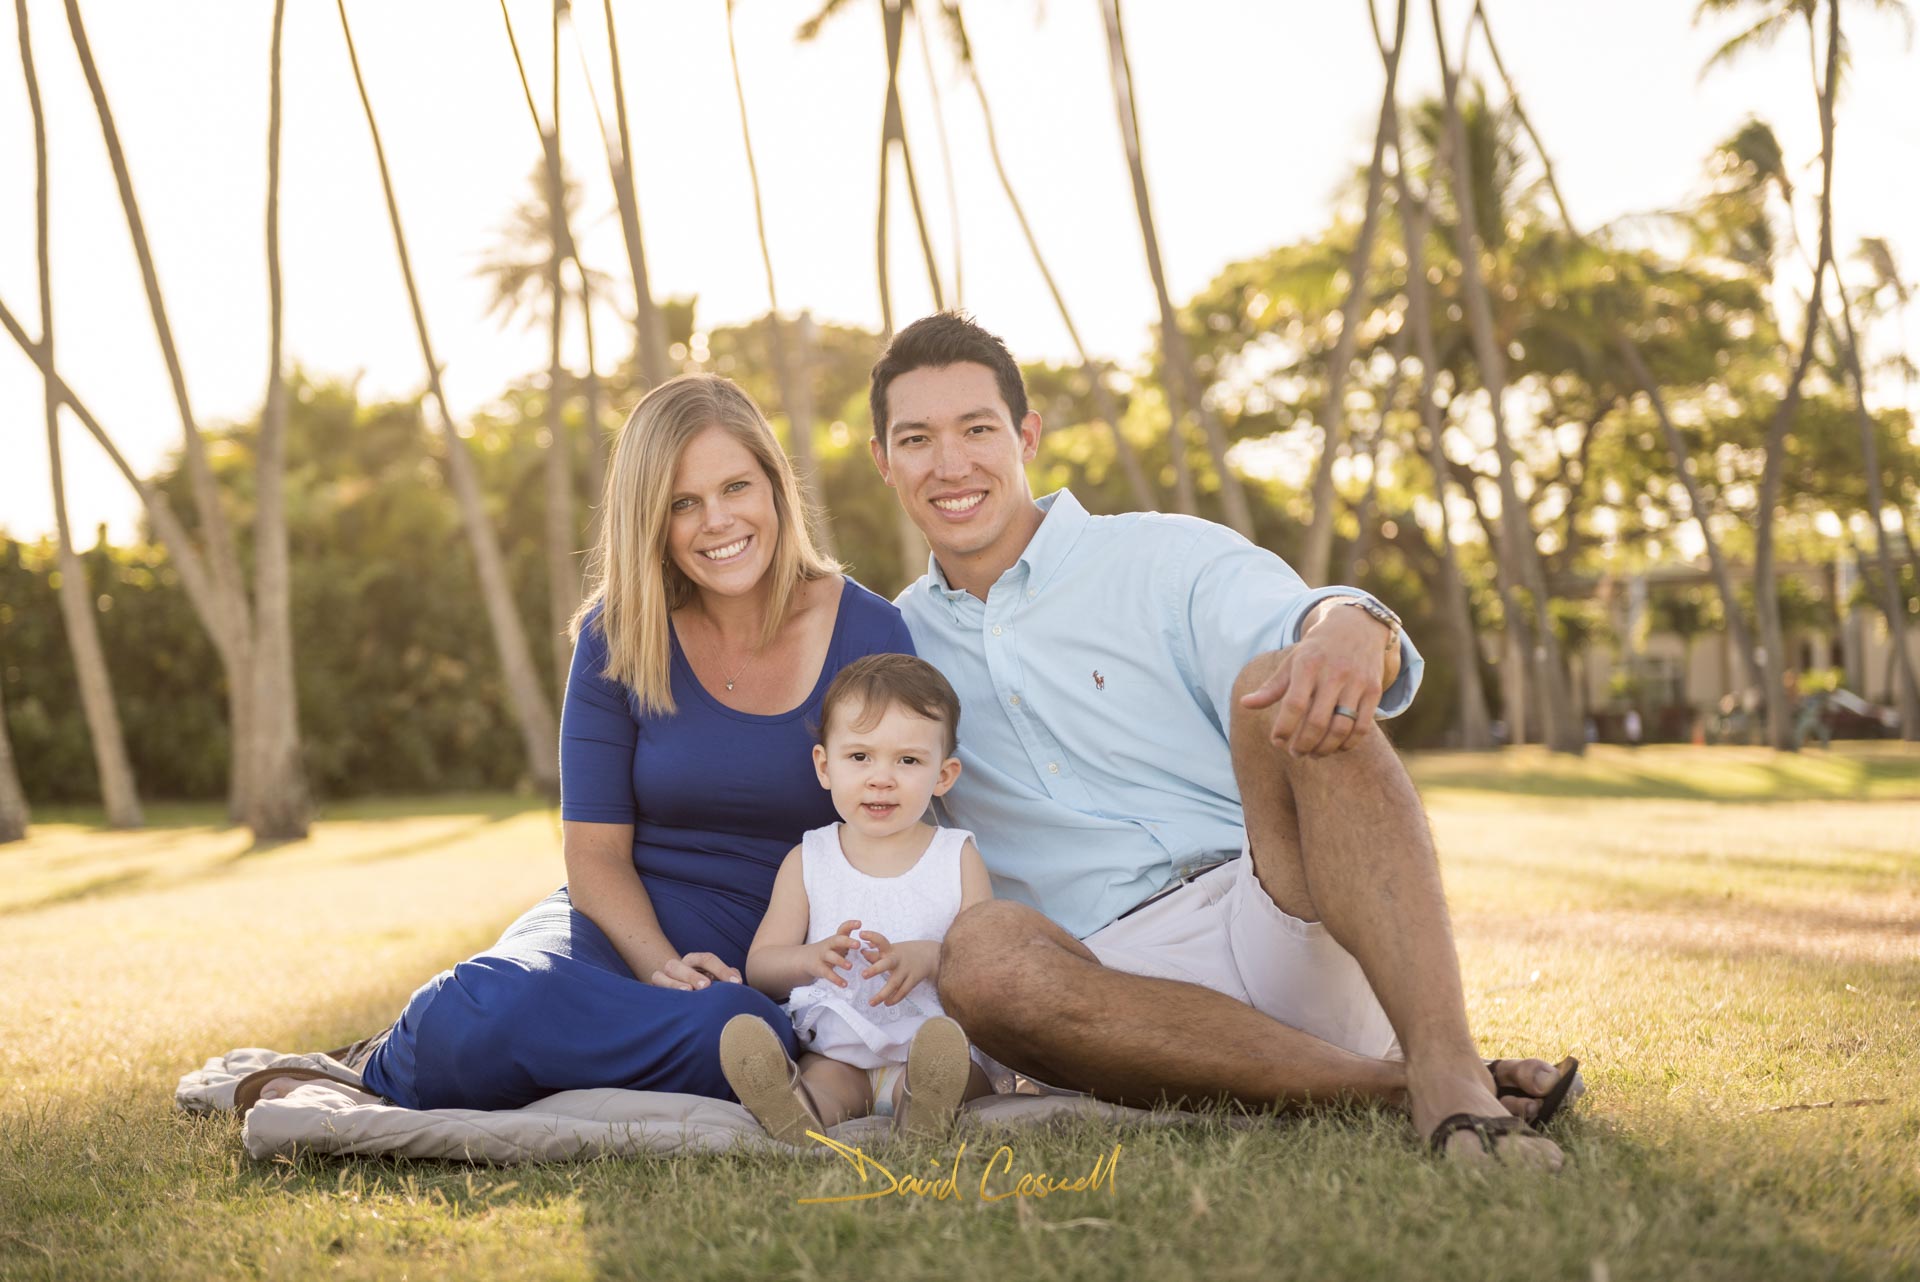 Sunset family portrait photography in Kahala, Oahu